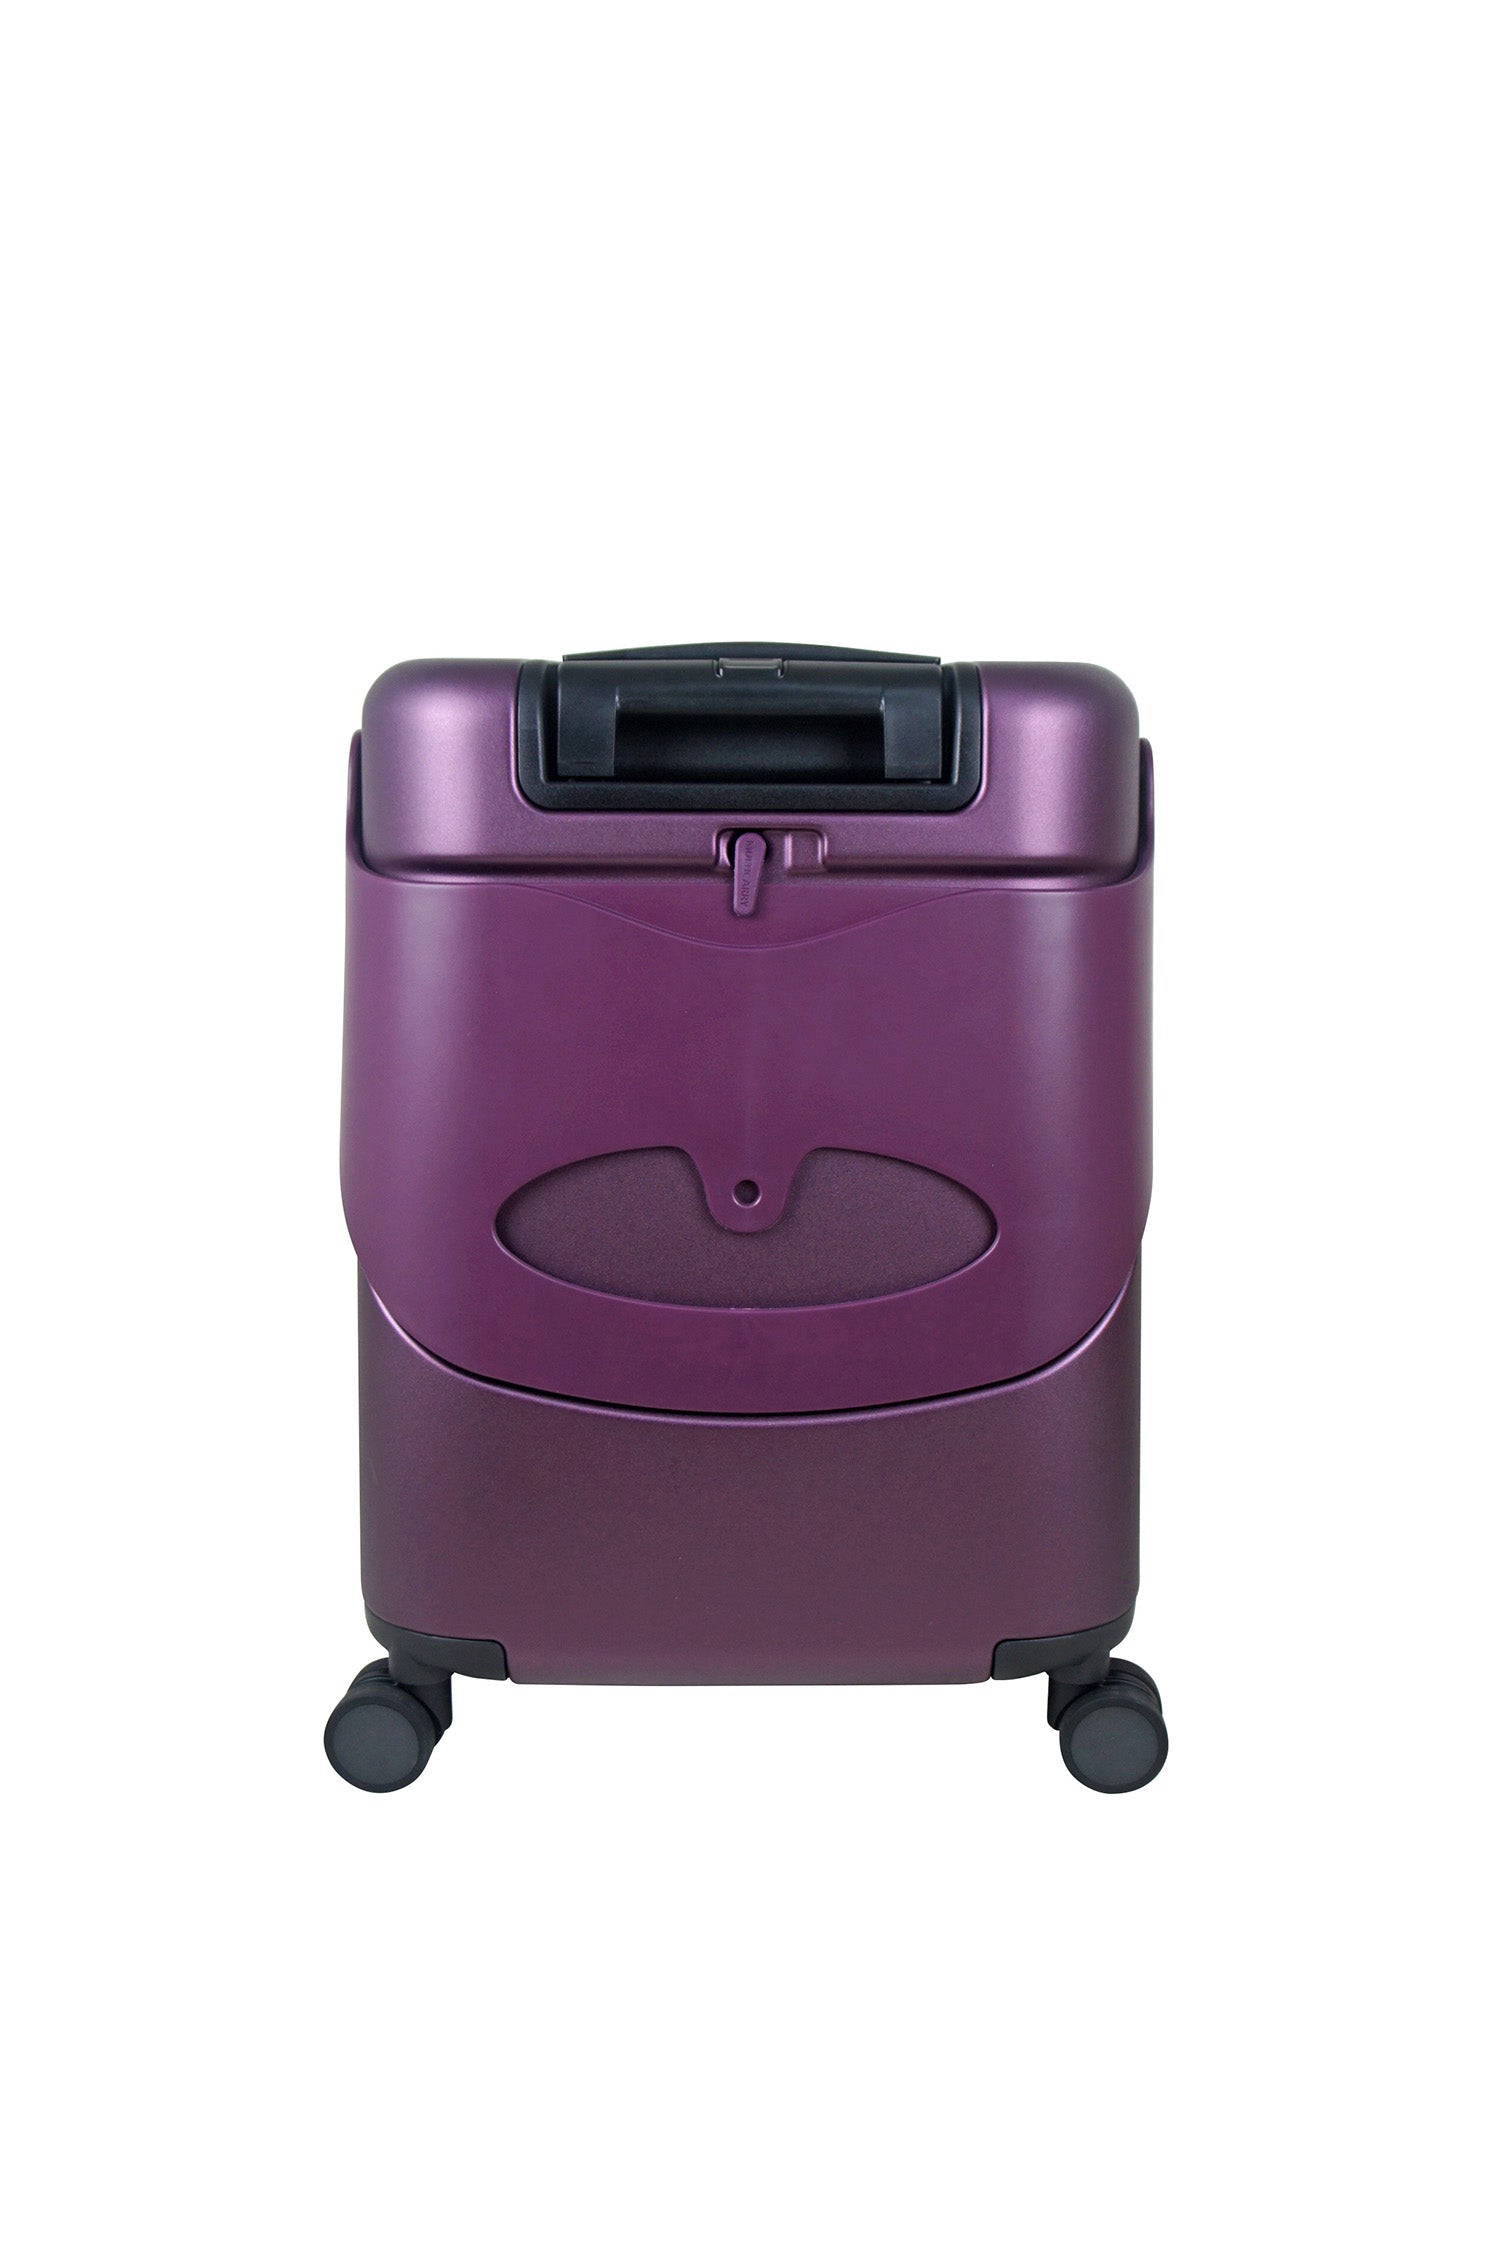 miamily luggage 18 inch royal purple